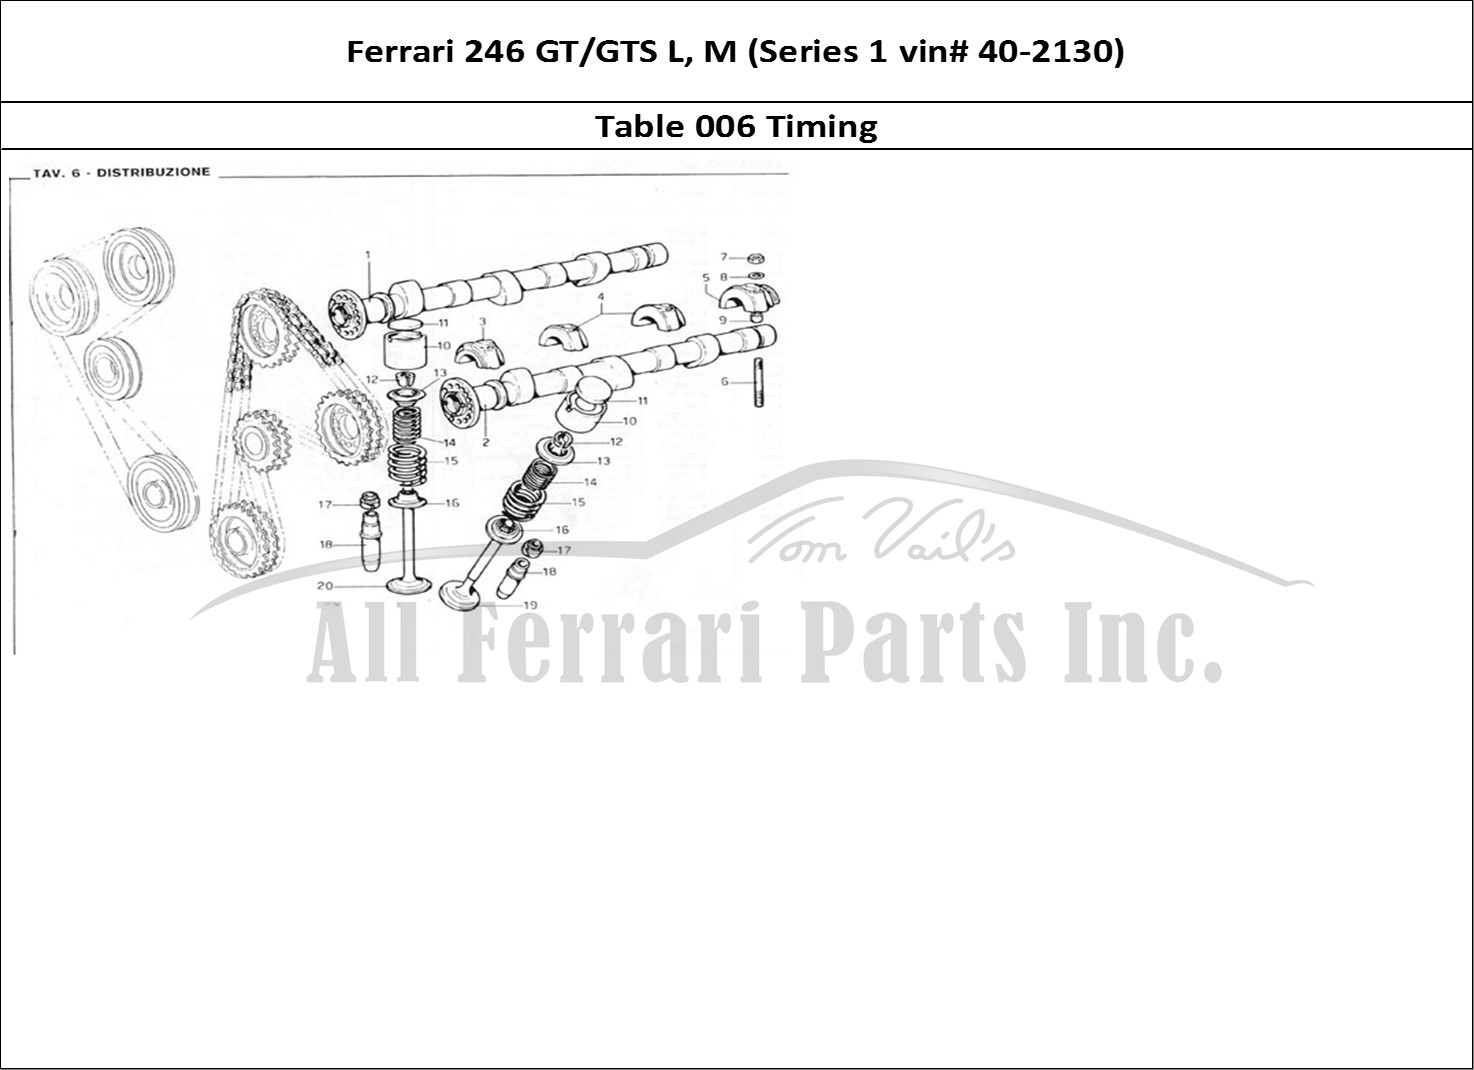 Ferrari Parts Ferrari 246 GT Series 1 Page 006 Timing